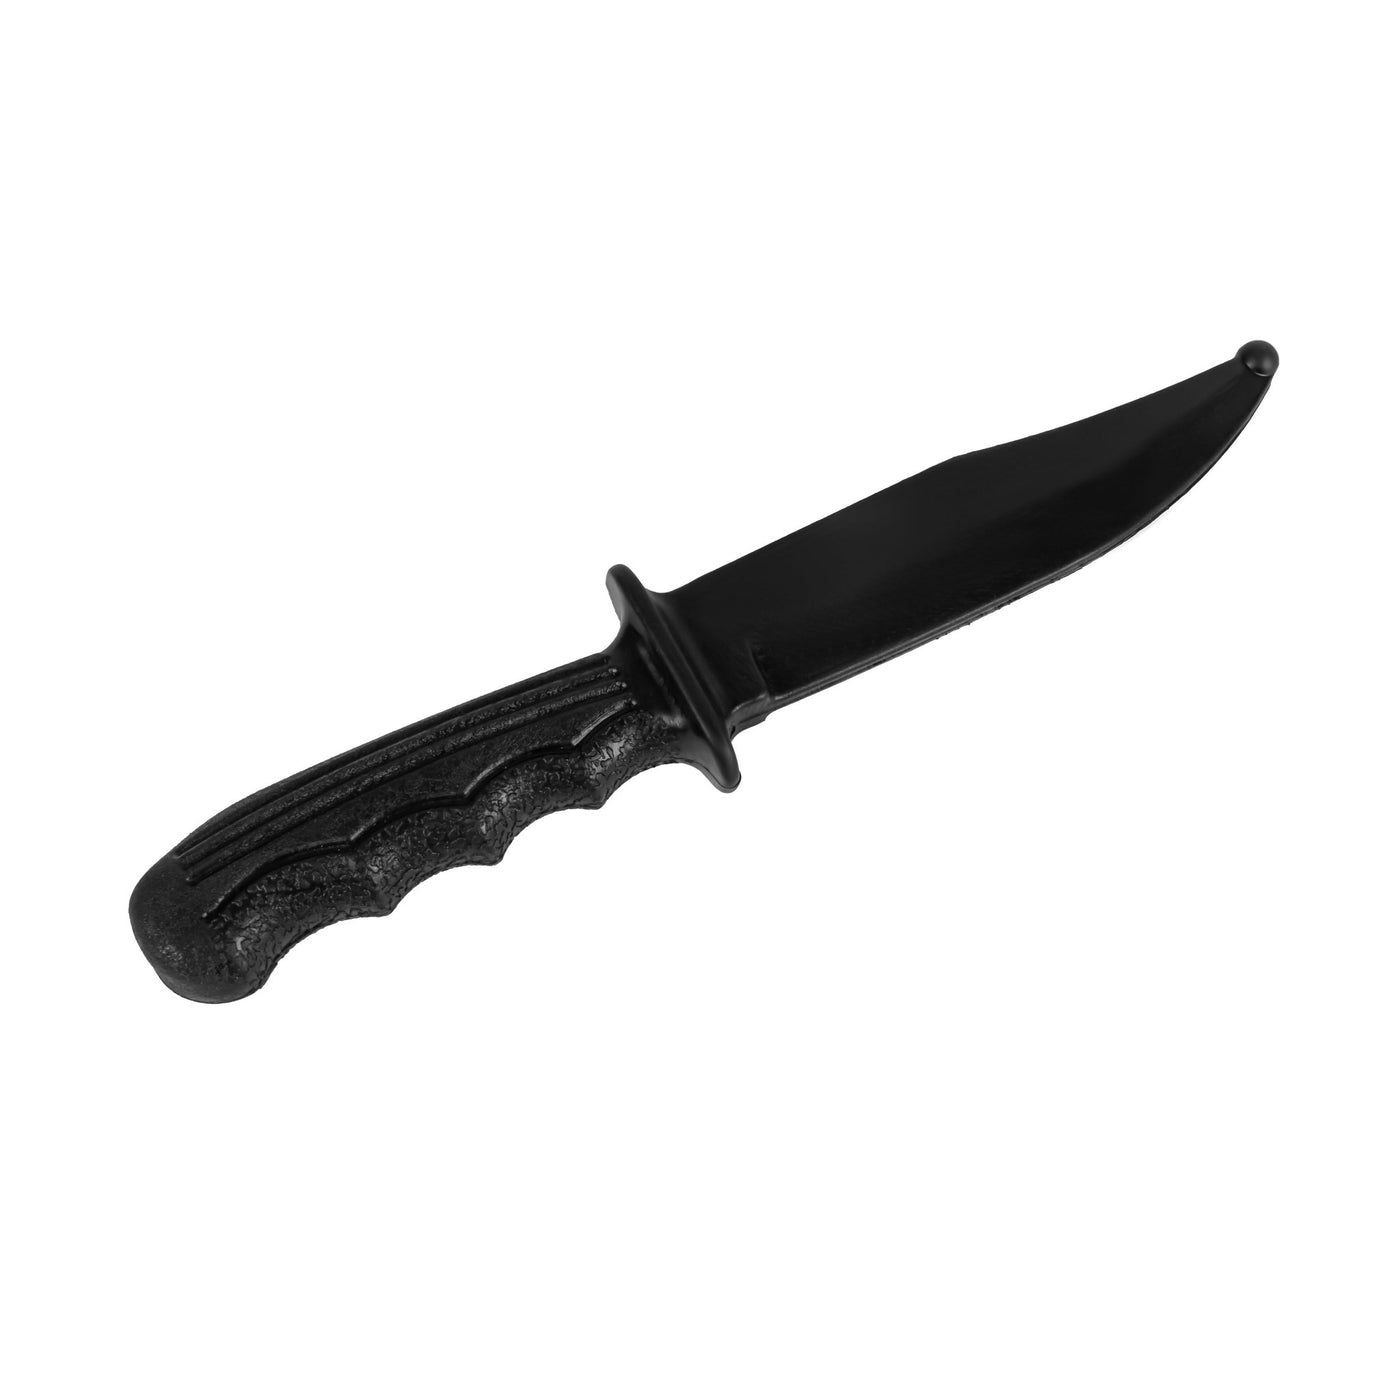 Black Hard Plastic Dagger For Training - Summo Sports